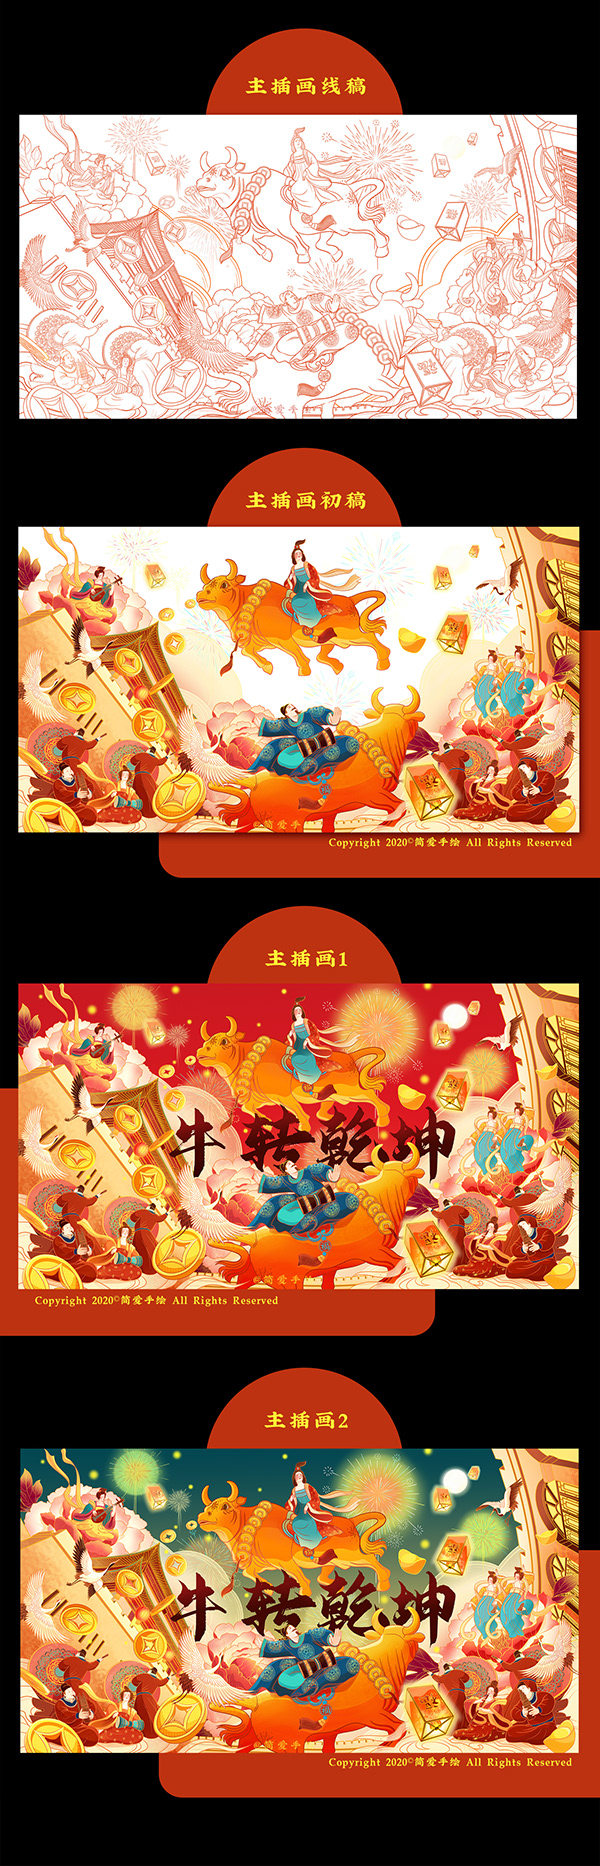 2021 New year of the Ox illustration【梦回唐朝过新年】牛年插画